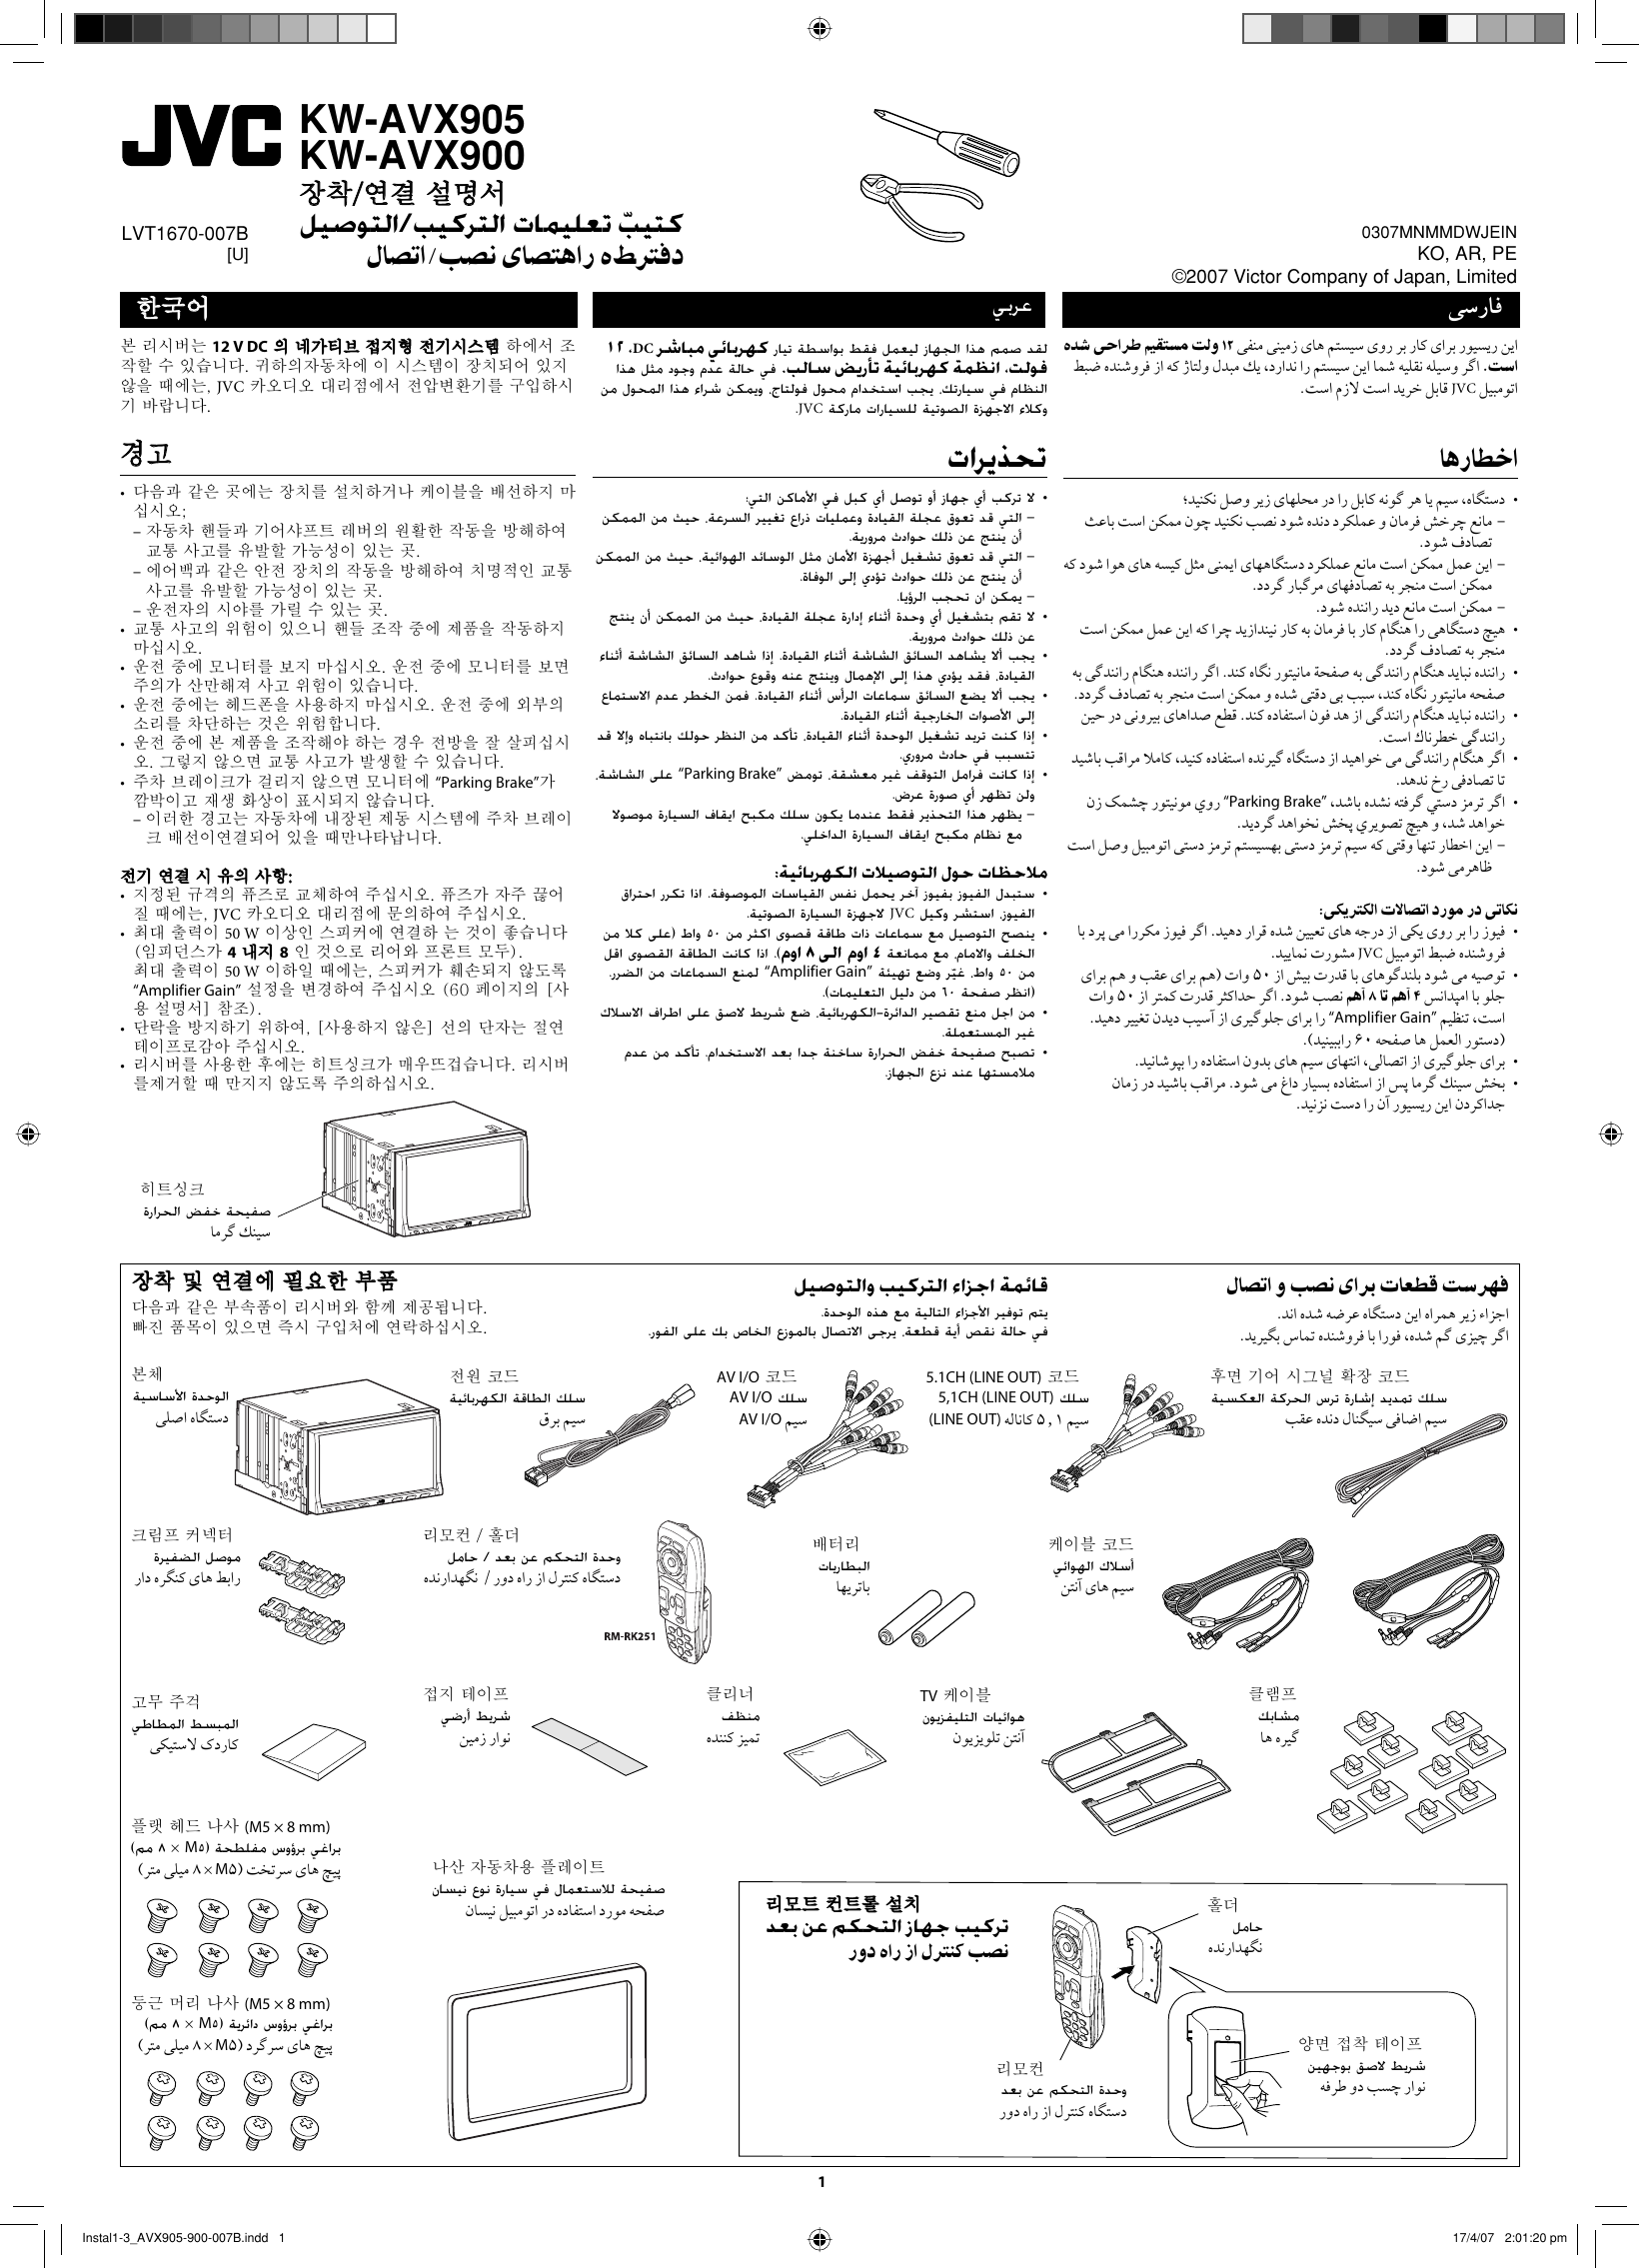 Page 1 of 6 - JVC KW-AVX900U KW-AVX905/KW-AVX900[U] User Manual INSTALLATION (Asia) LVT1670-007B